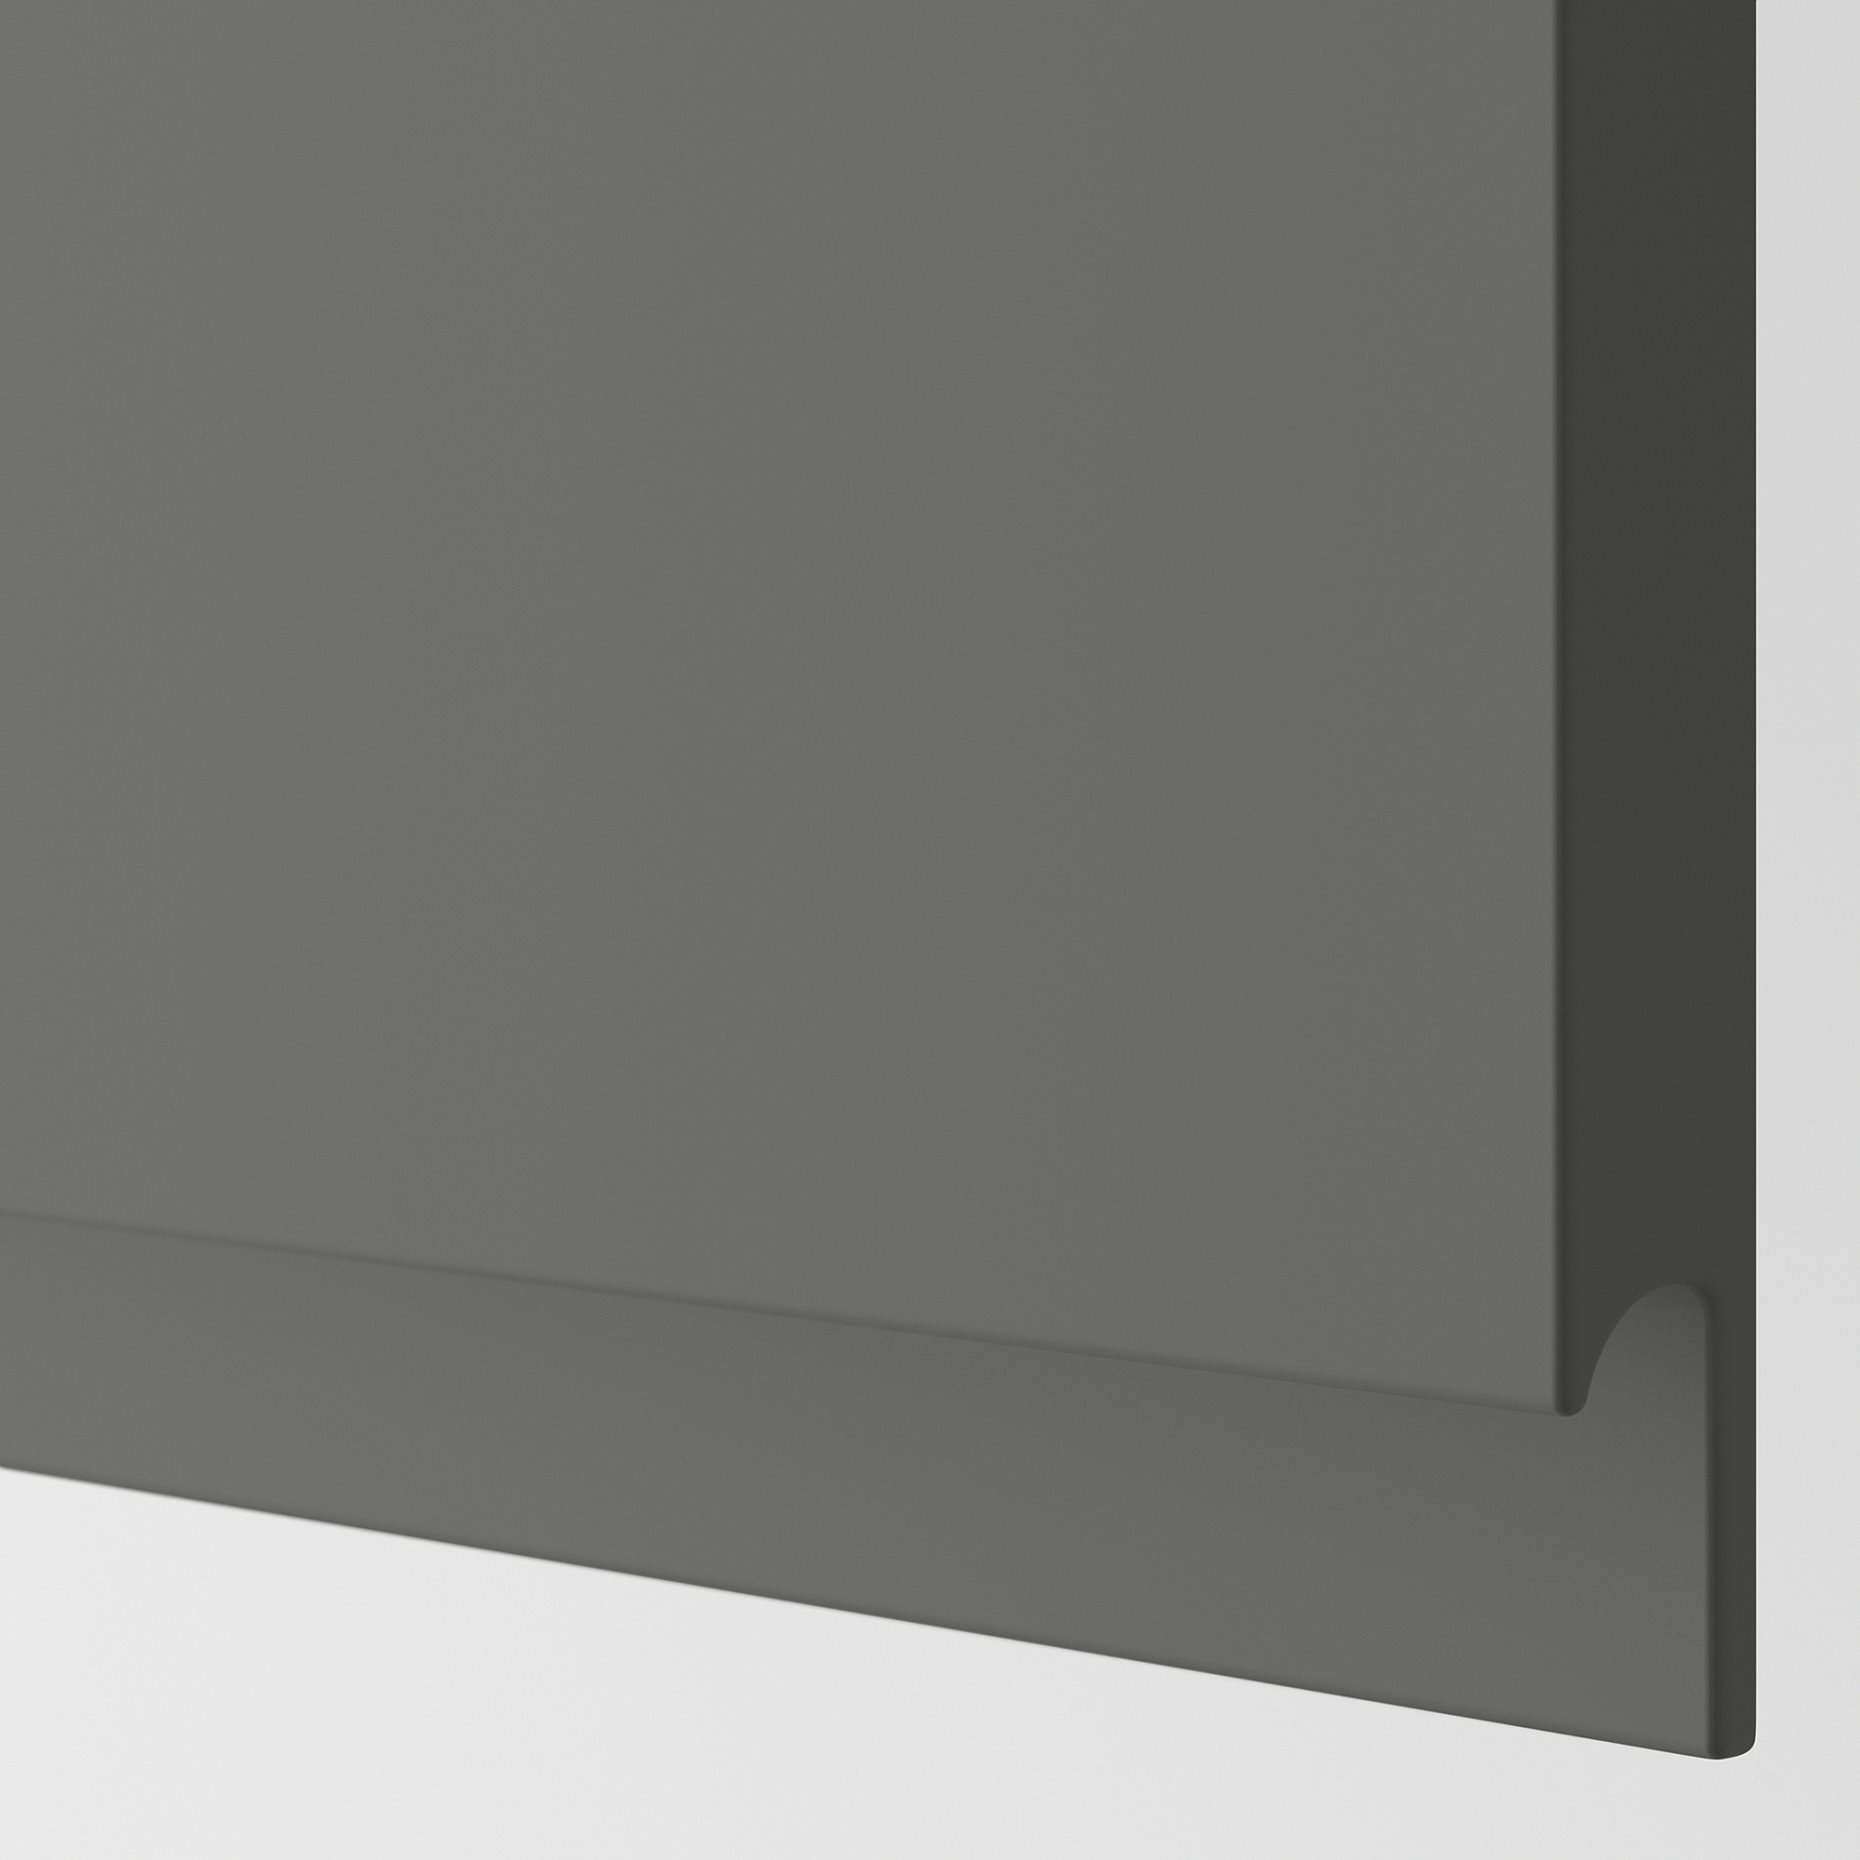 METOD/MAXIMERA, ψηλό ντουλάπι για φούρνο μικρoκυμάτων με πόρτα/2 συρτάρια, 60x60x200 cm, 194.652.02